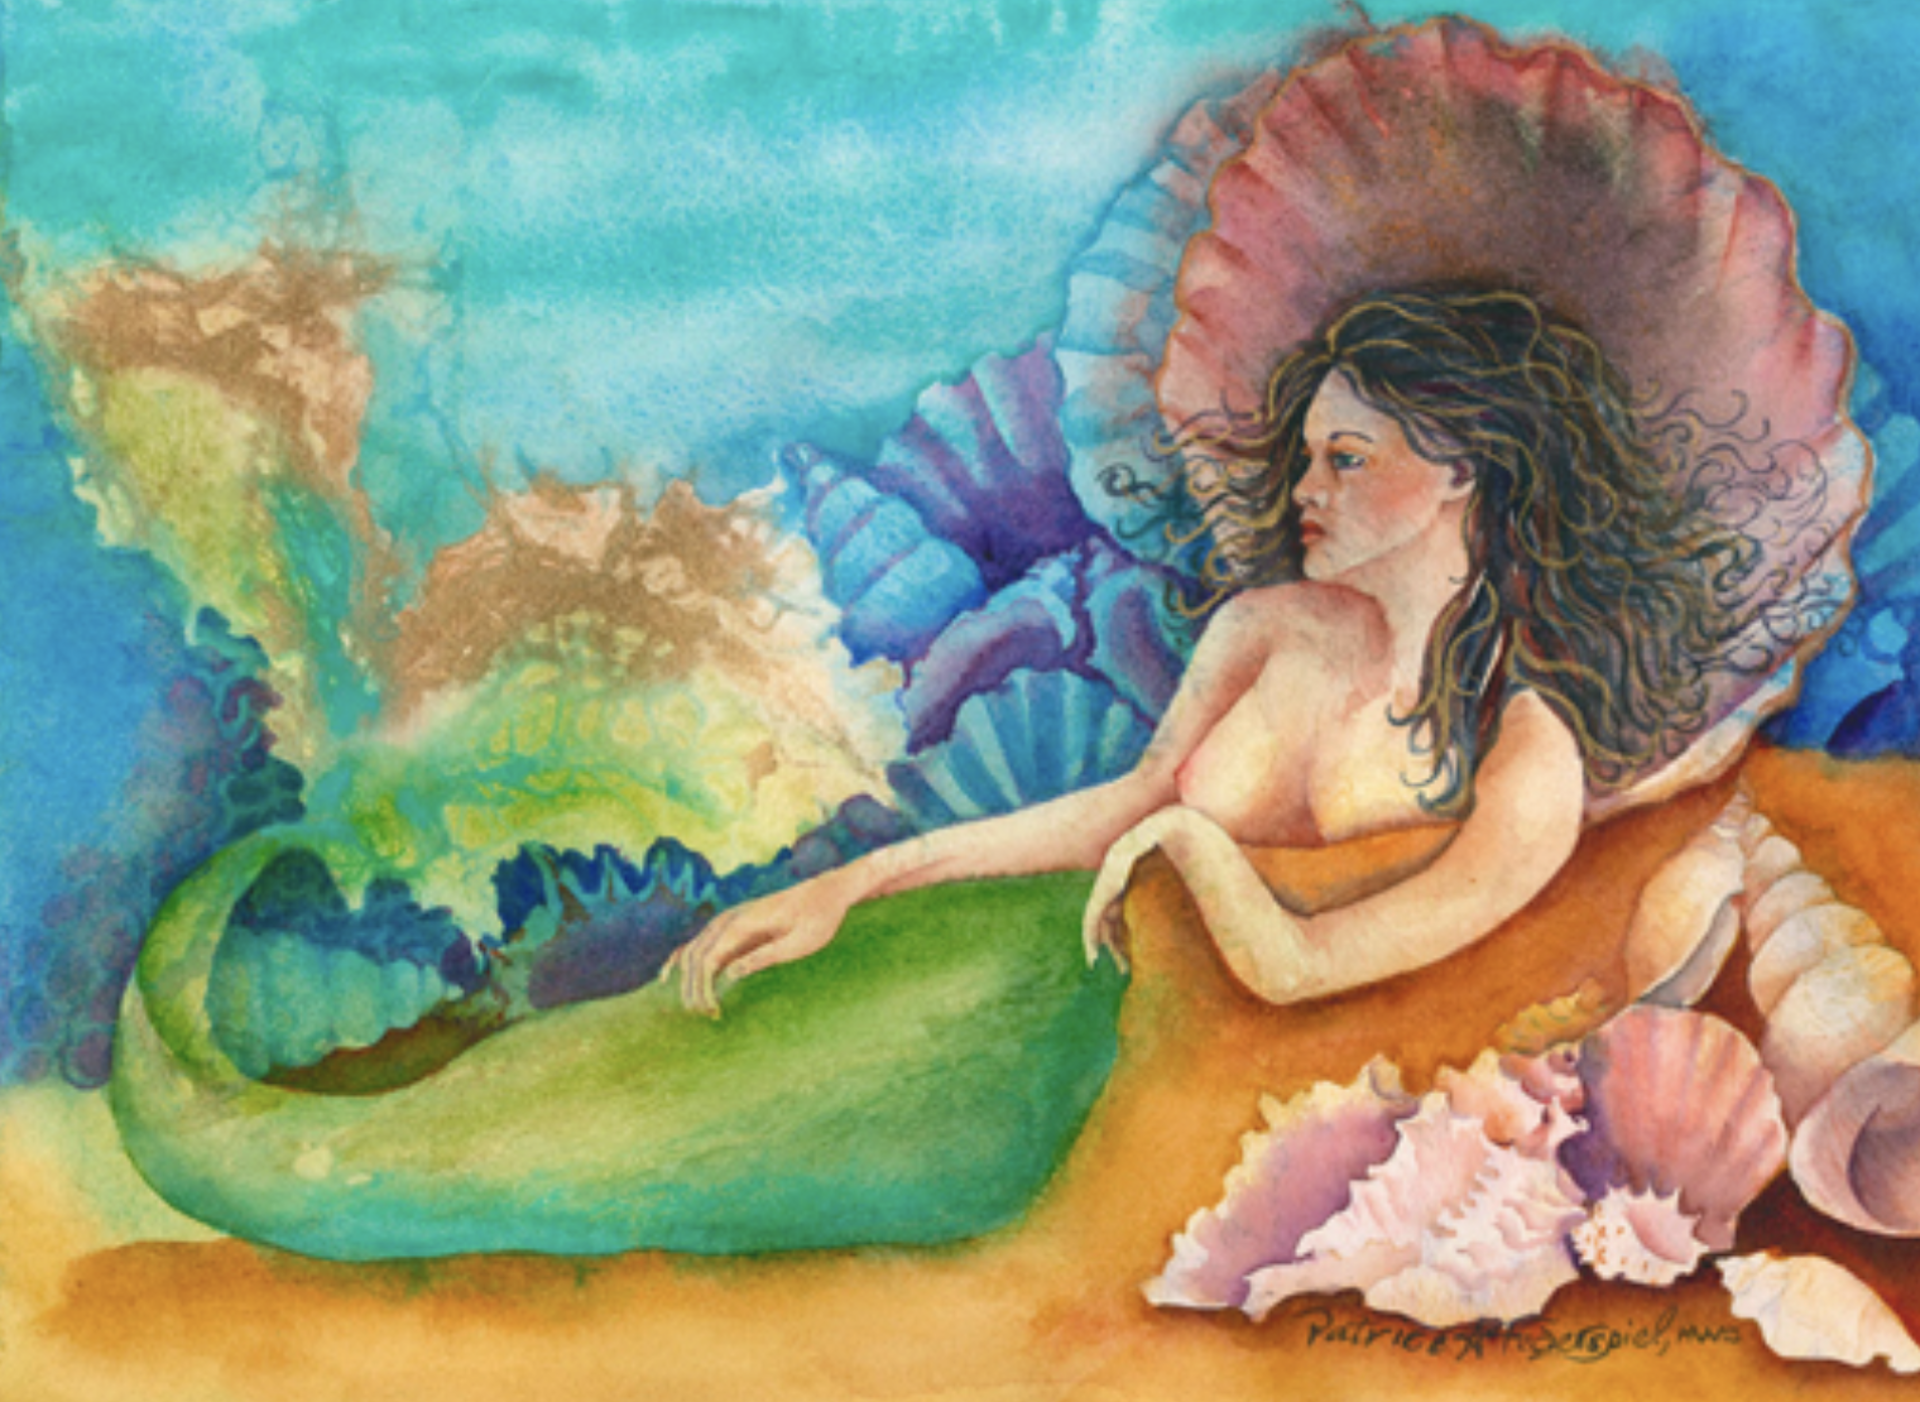 SeaShell Mermaid Queen by Patrice Ann Federspiel